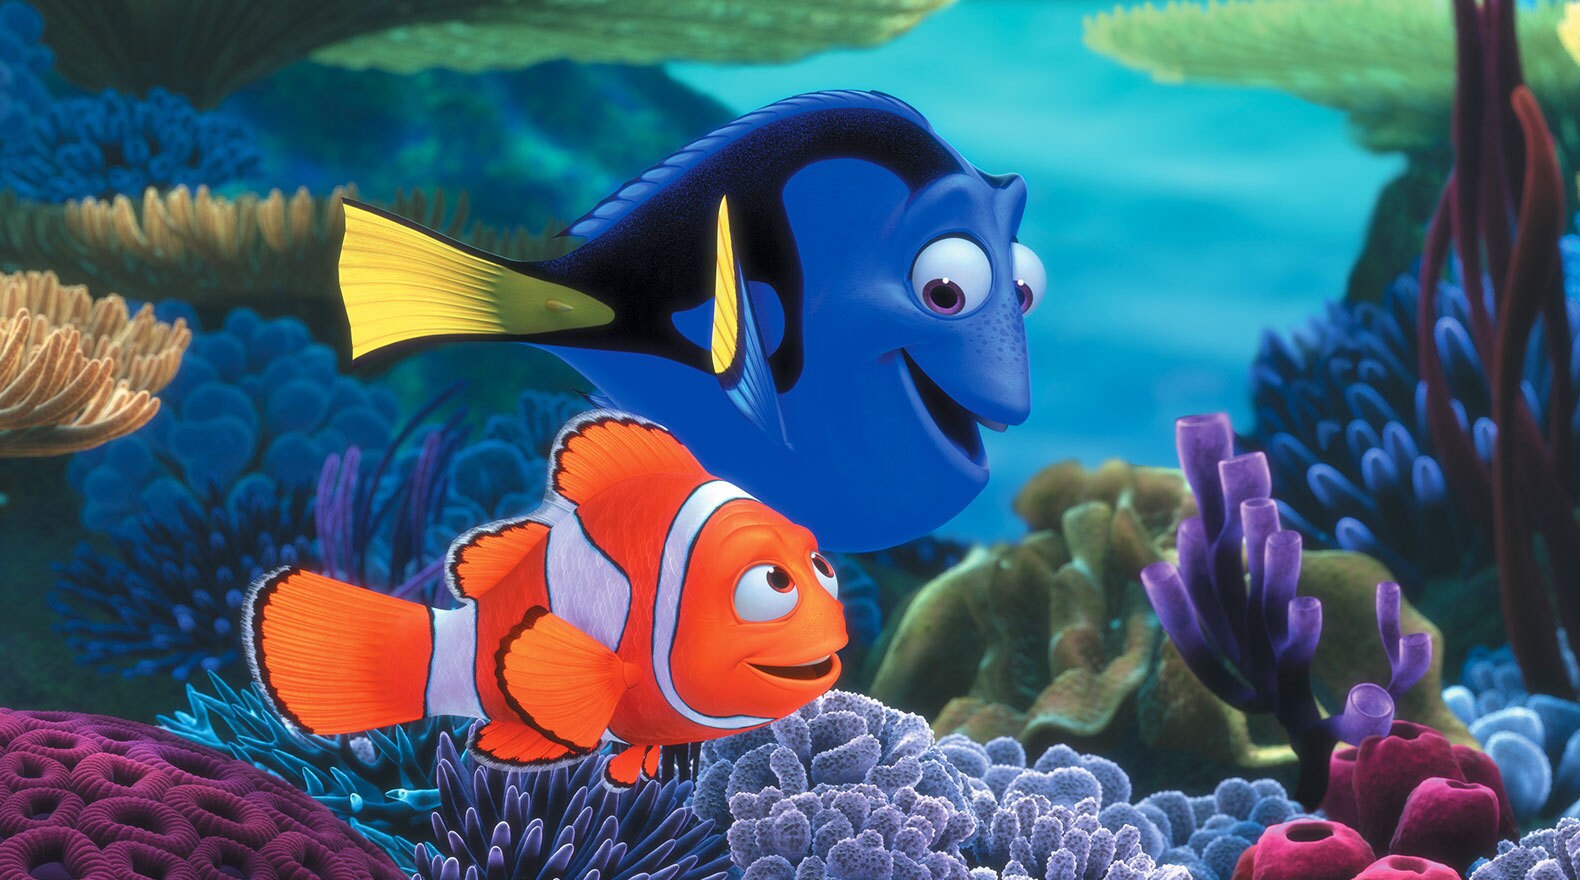  Marlin (Albert Brooks) and Dory (Ellen DeGeneres) swimming amongst the coral reef in "Finding Nemo"